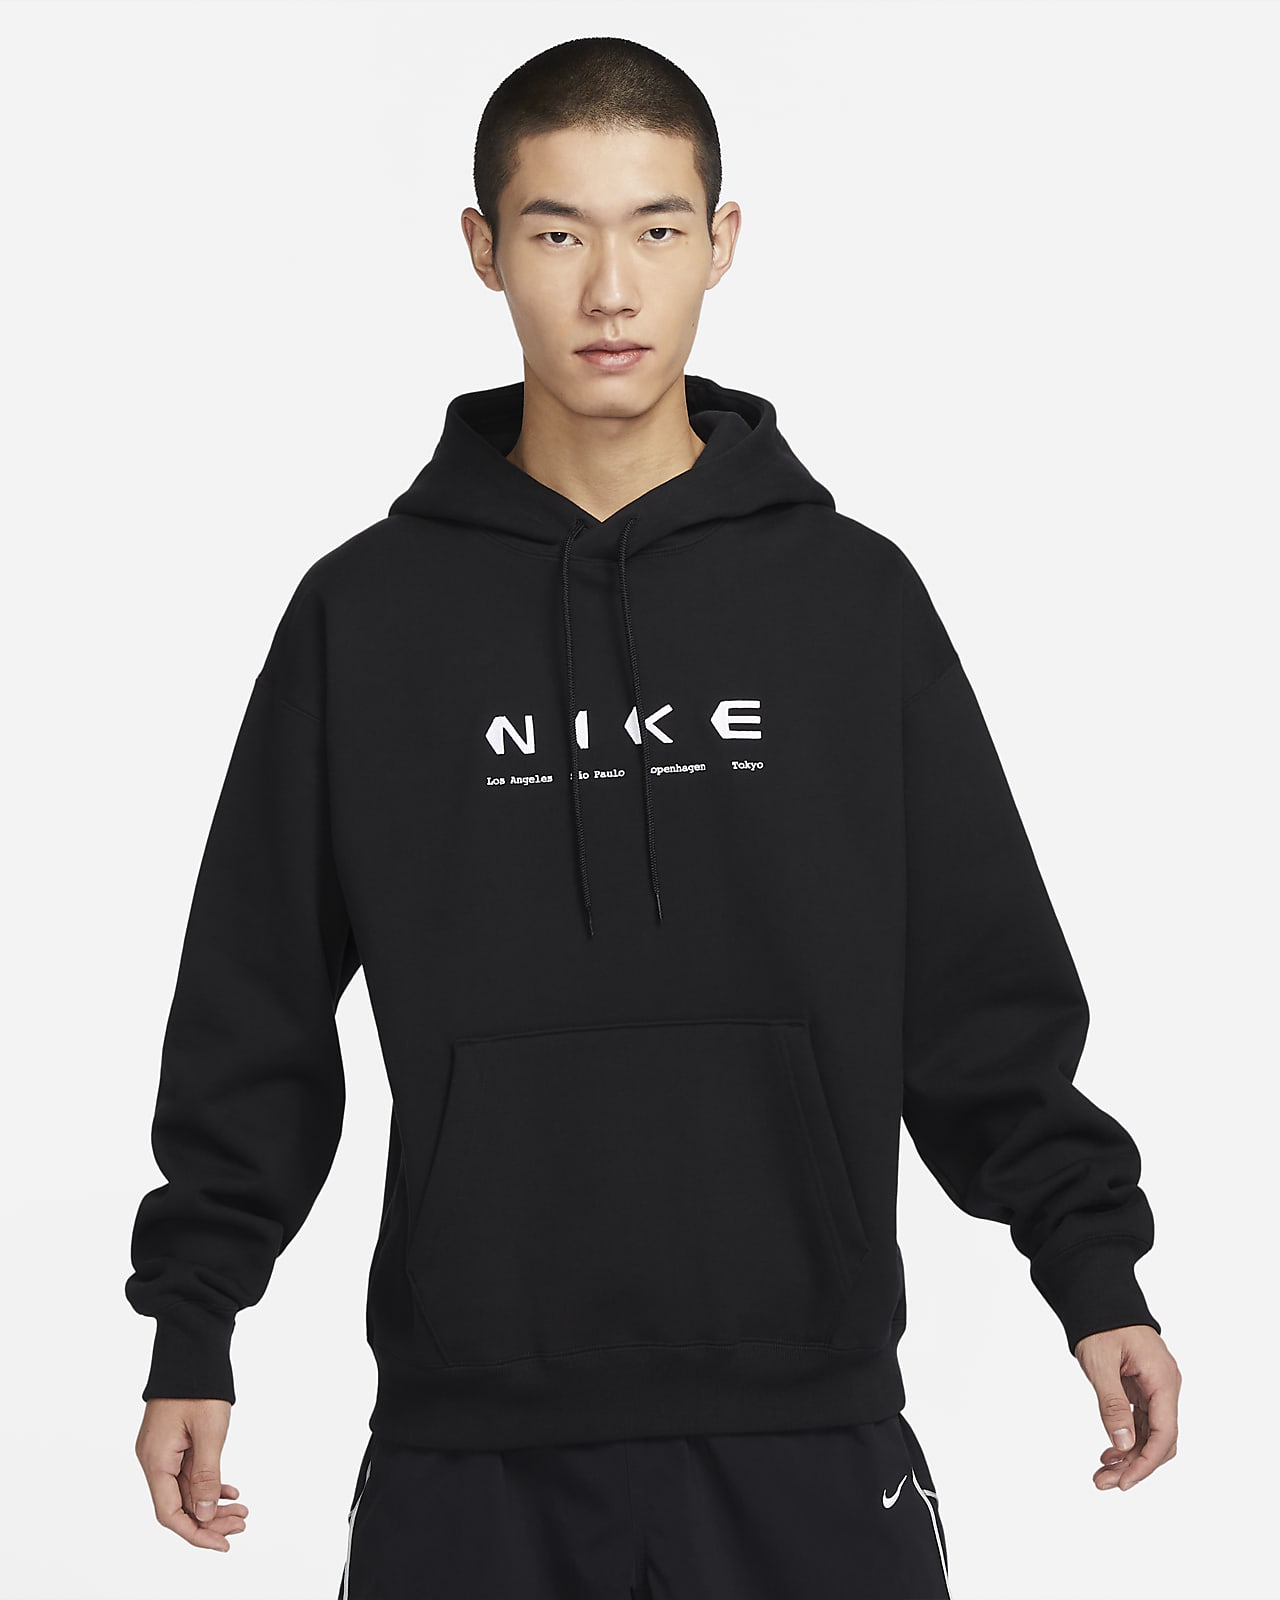 Método revolución Seguro Nike SB Fleece Pullover Skate Hoodie. Nike ID